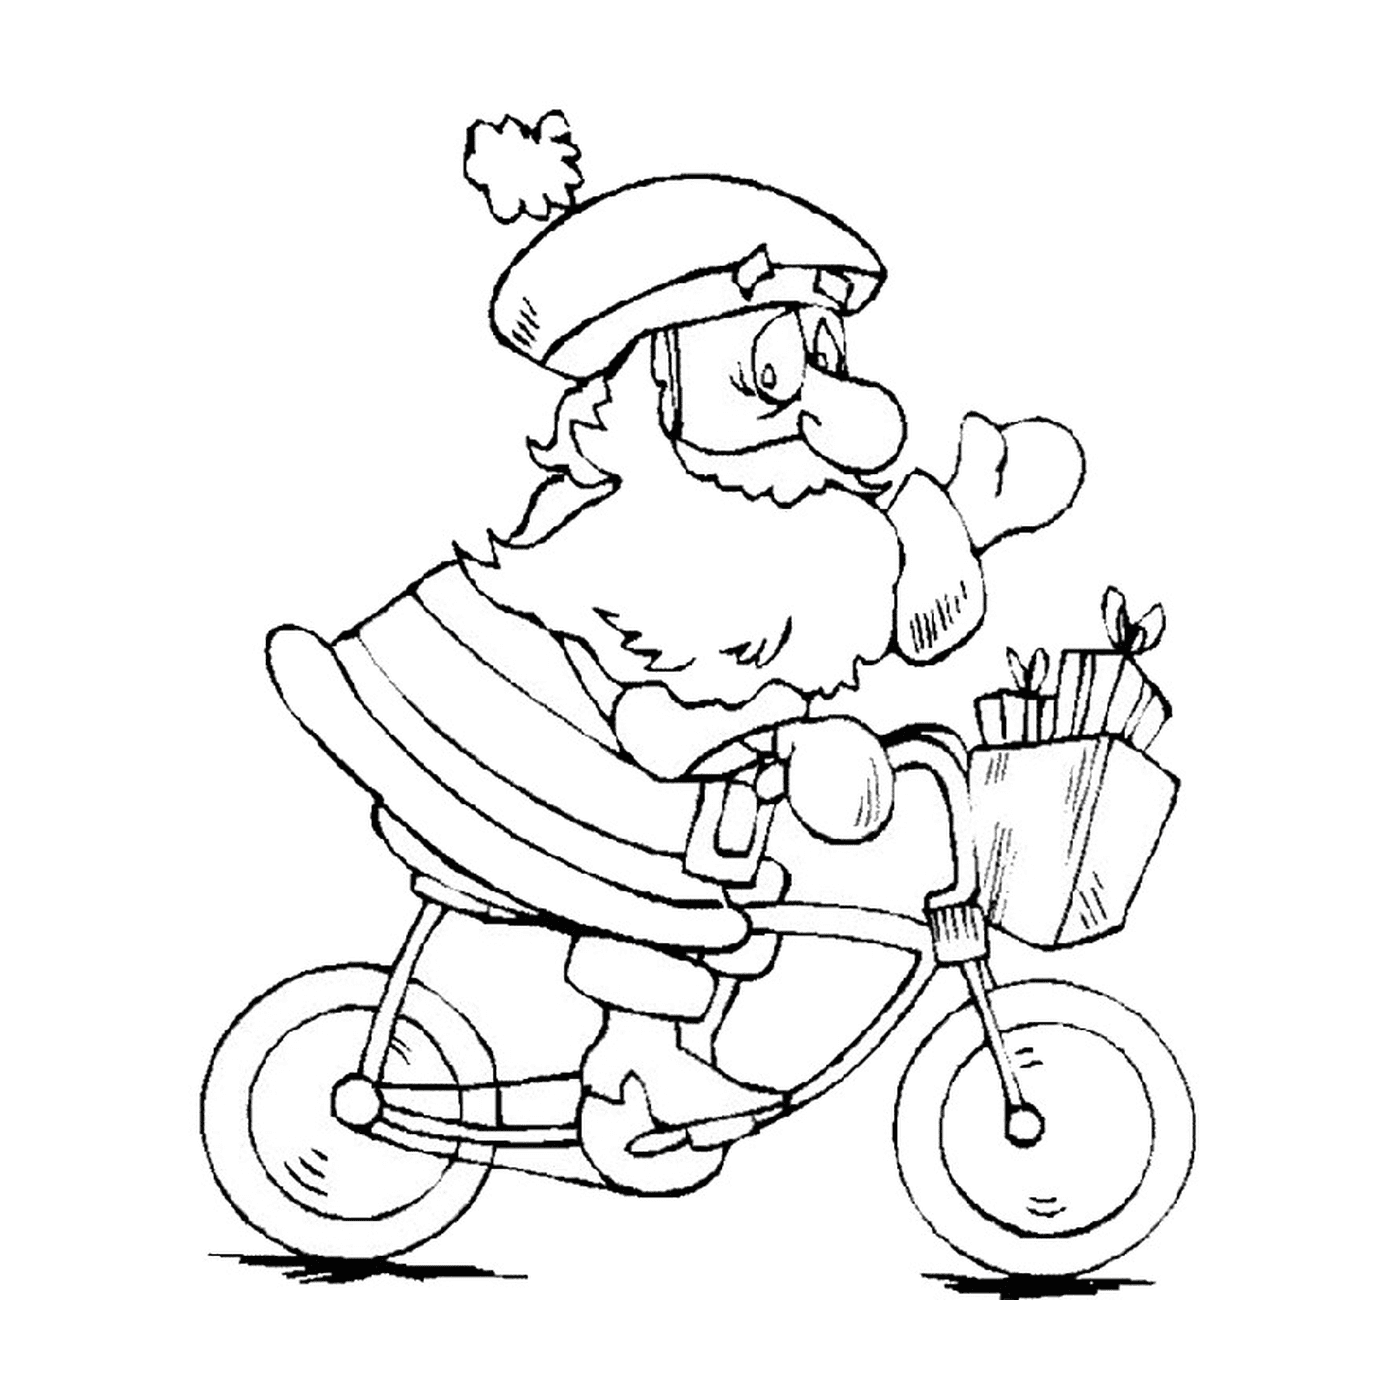  Santa en bicicleta 